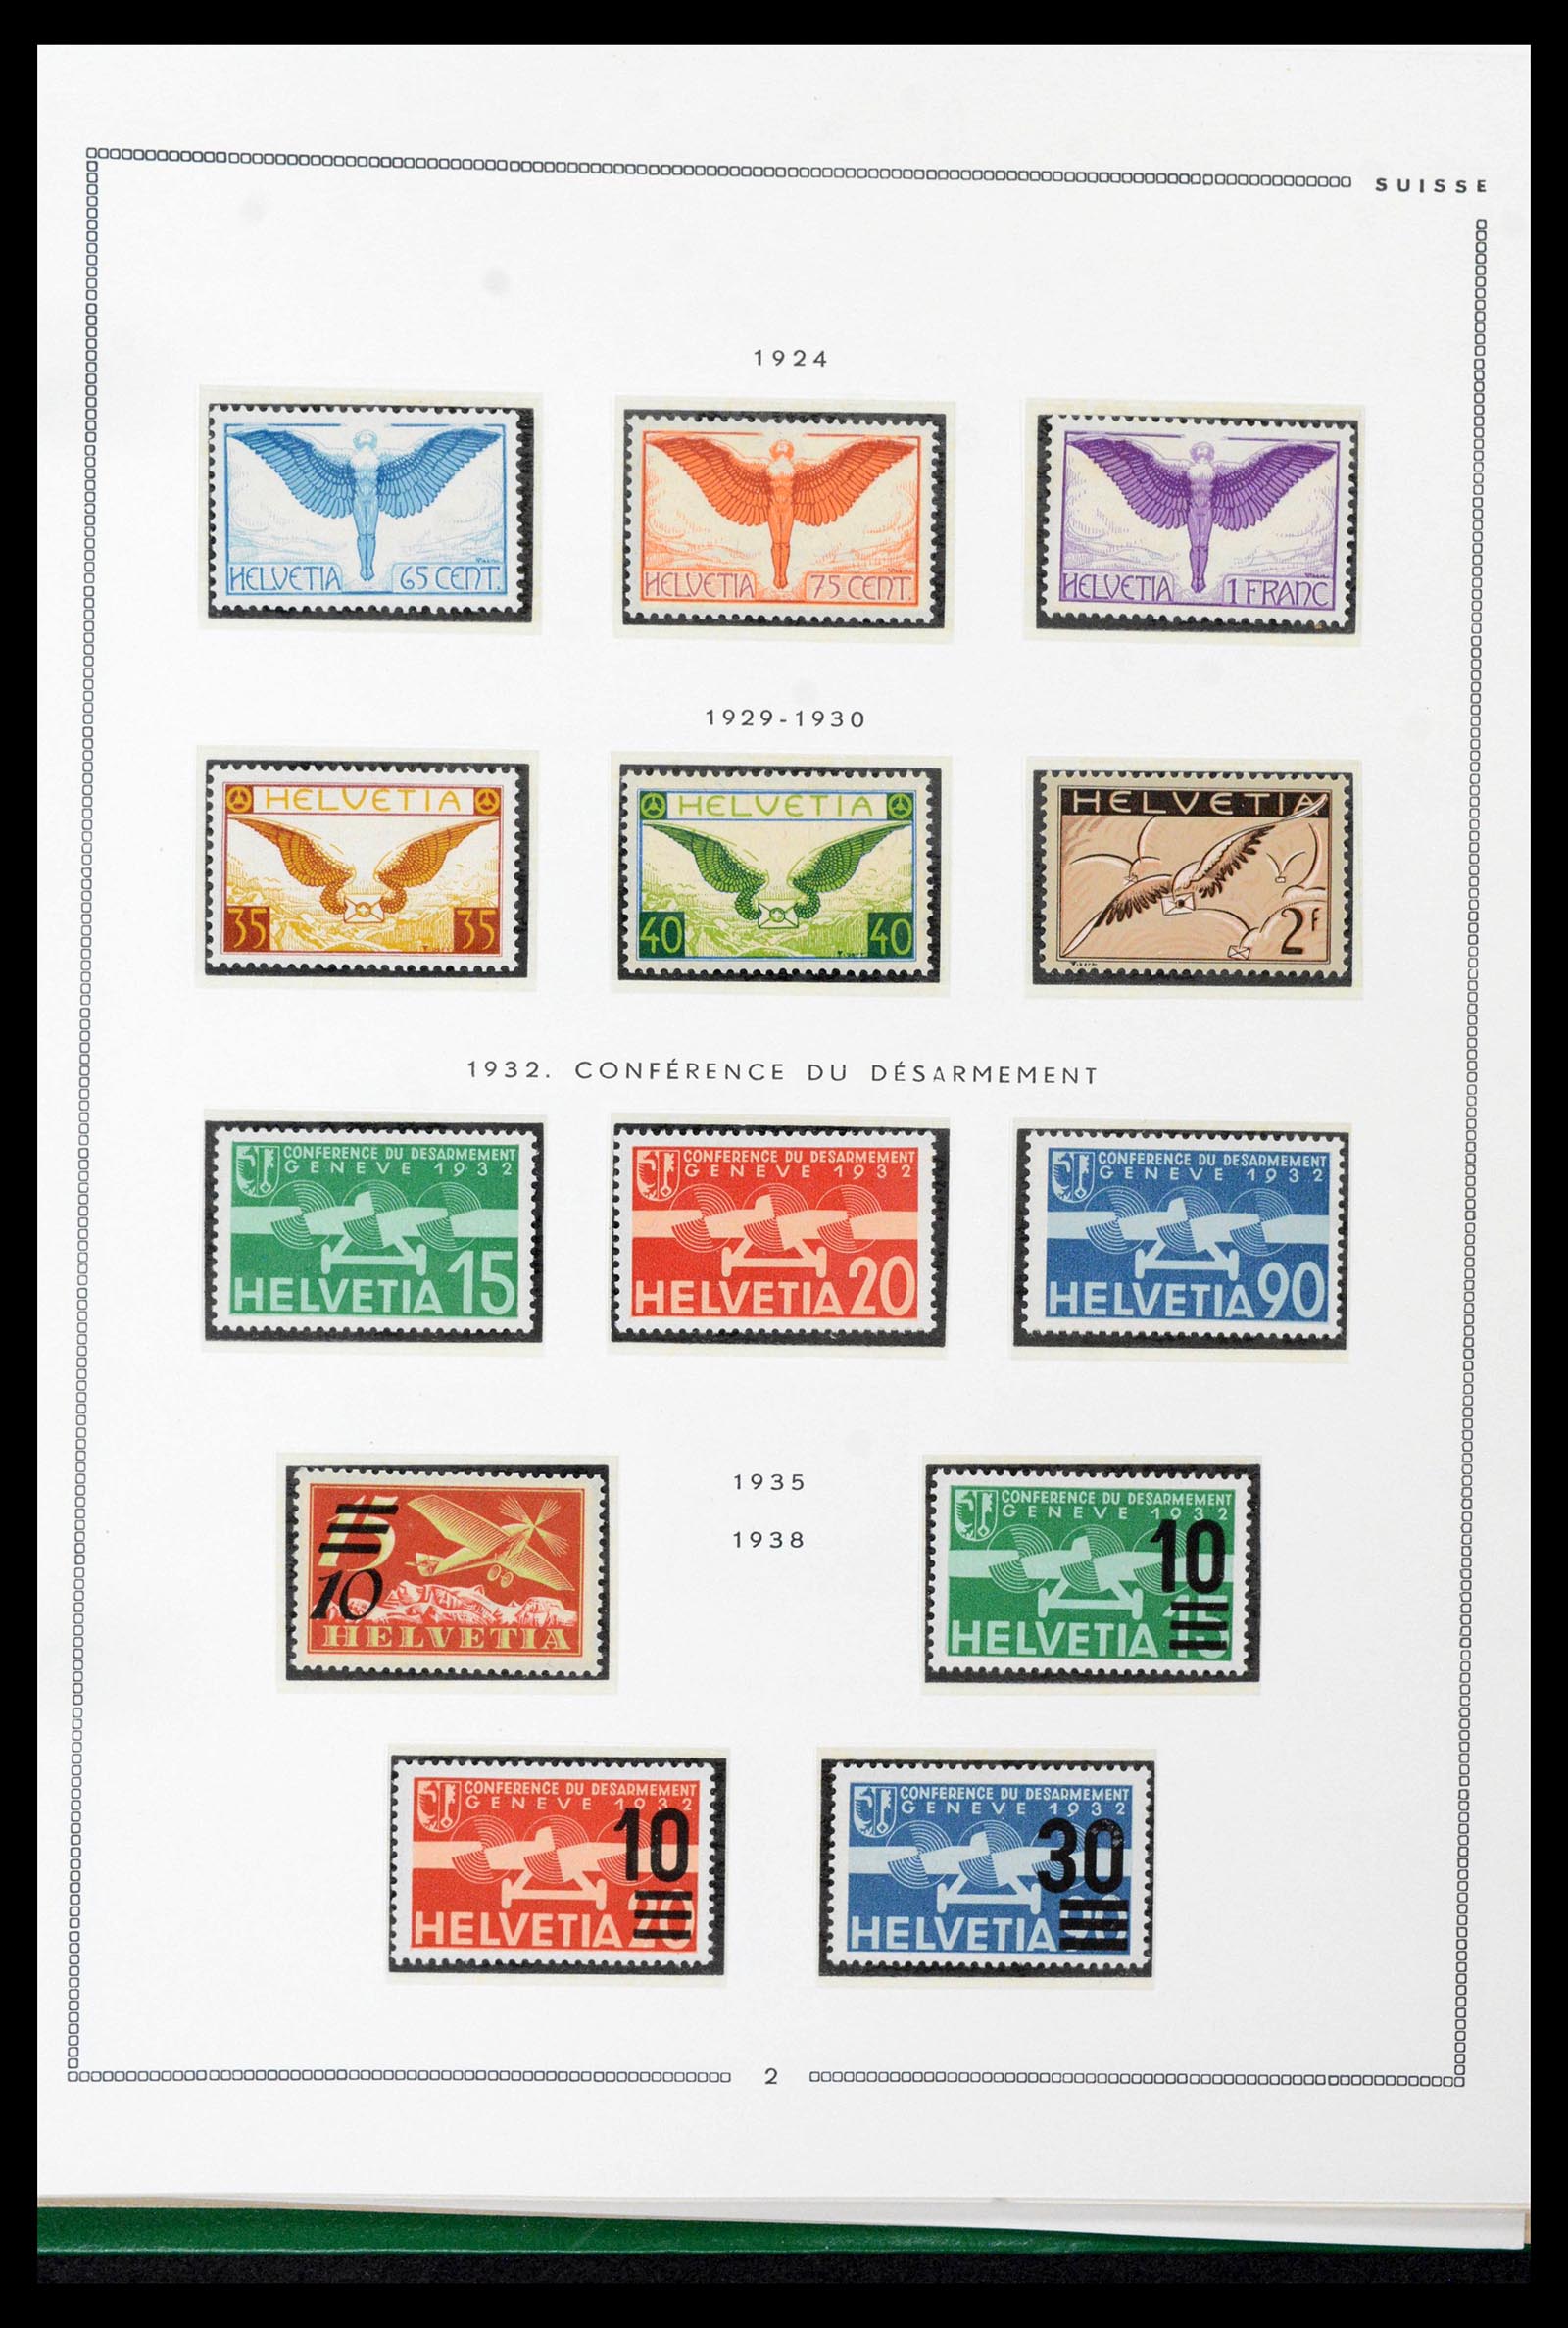 39096 0047 - Stamp collection 39096 Switzerland 1907-1963.